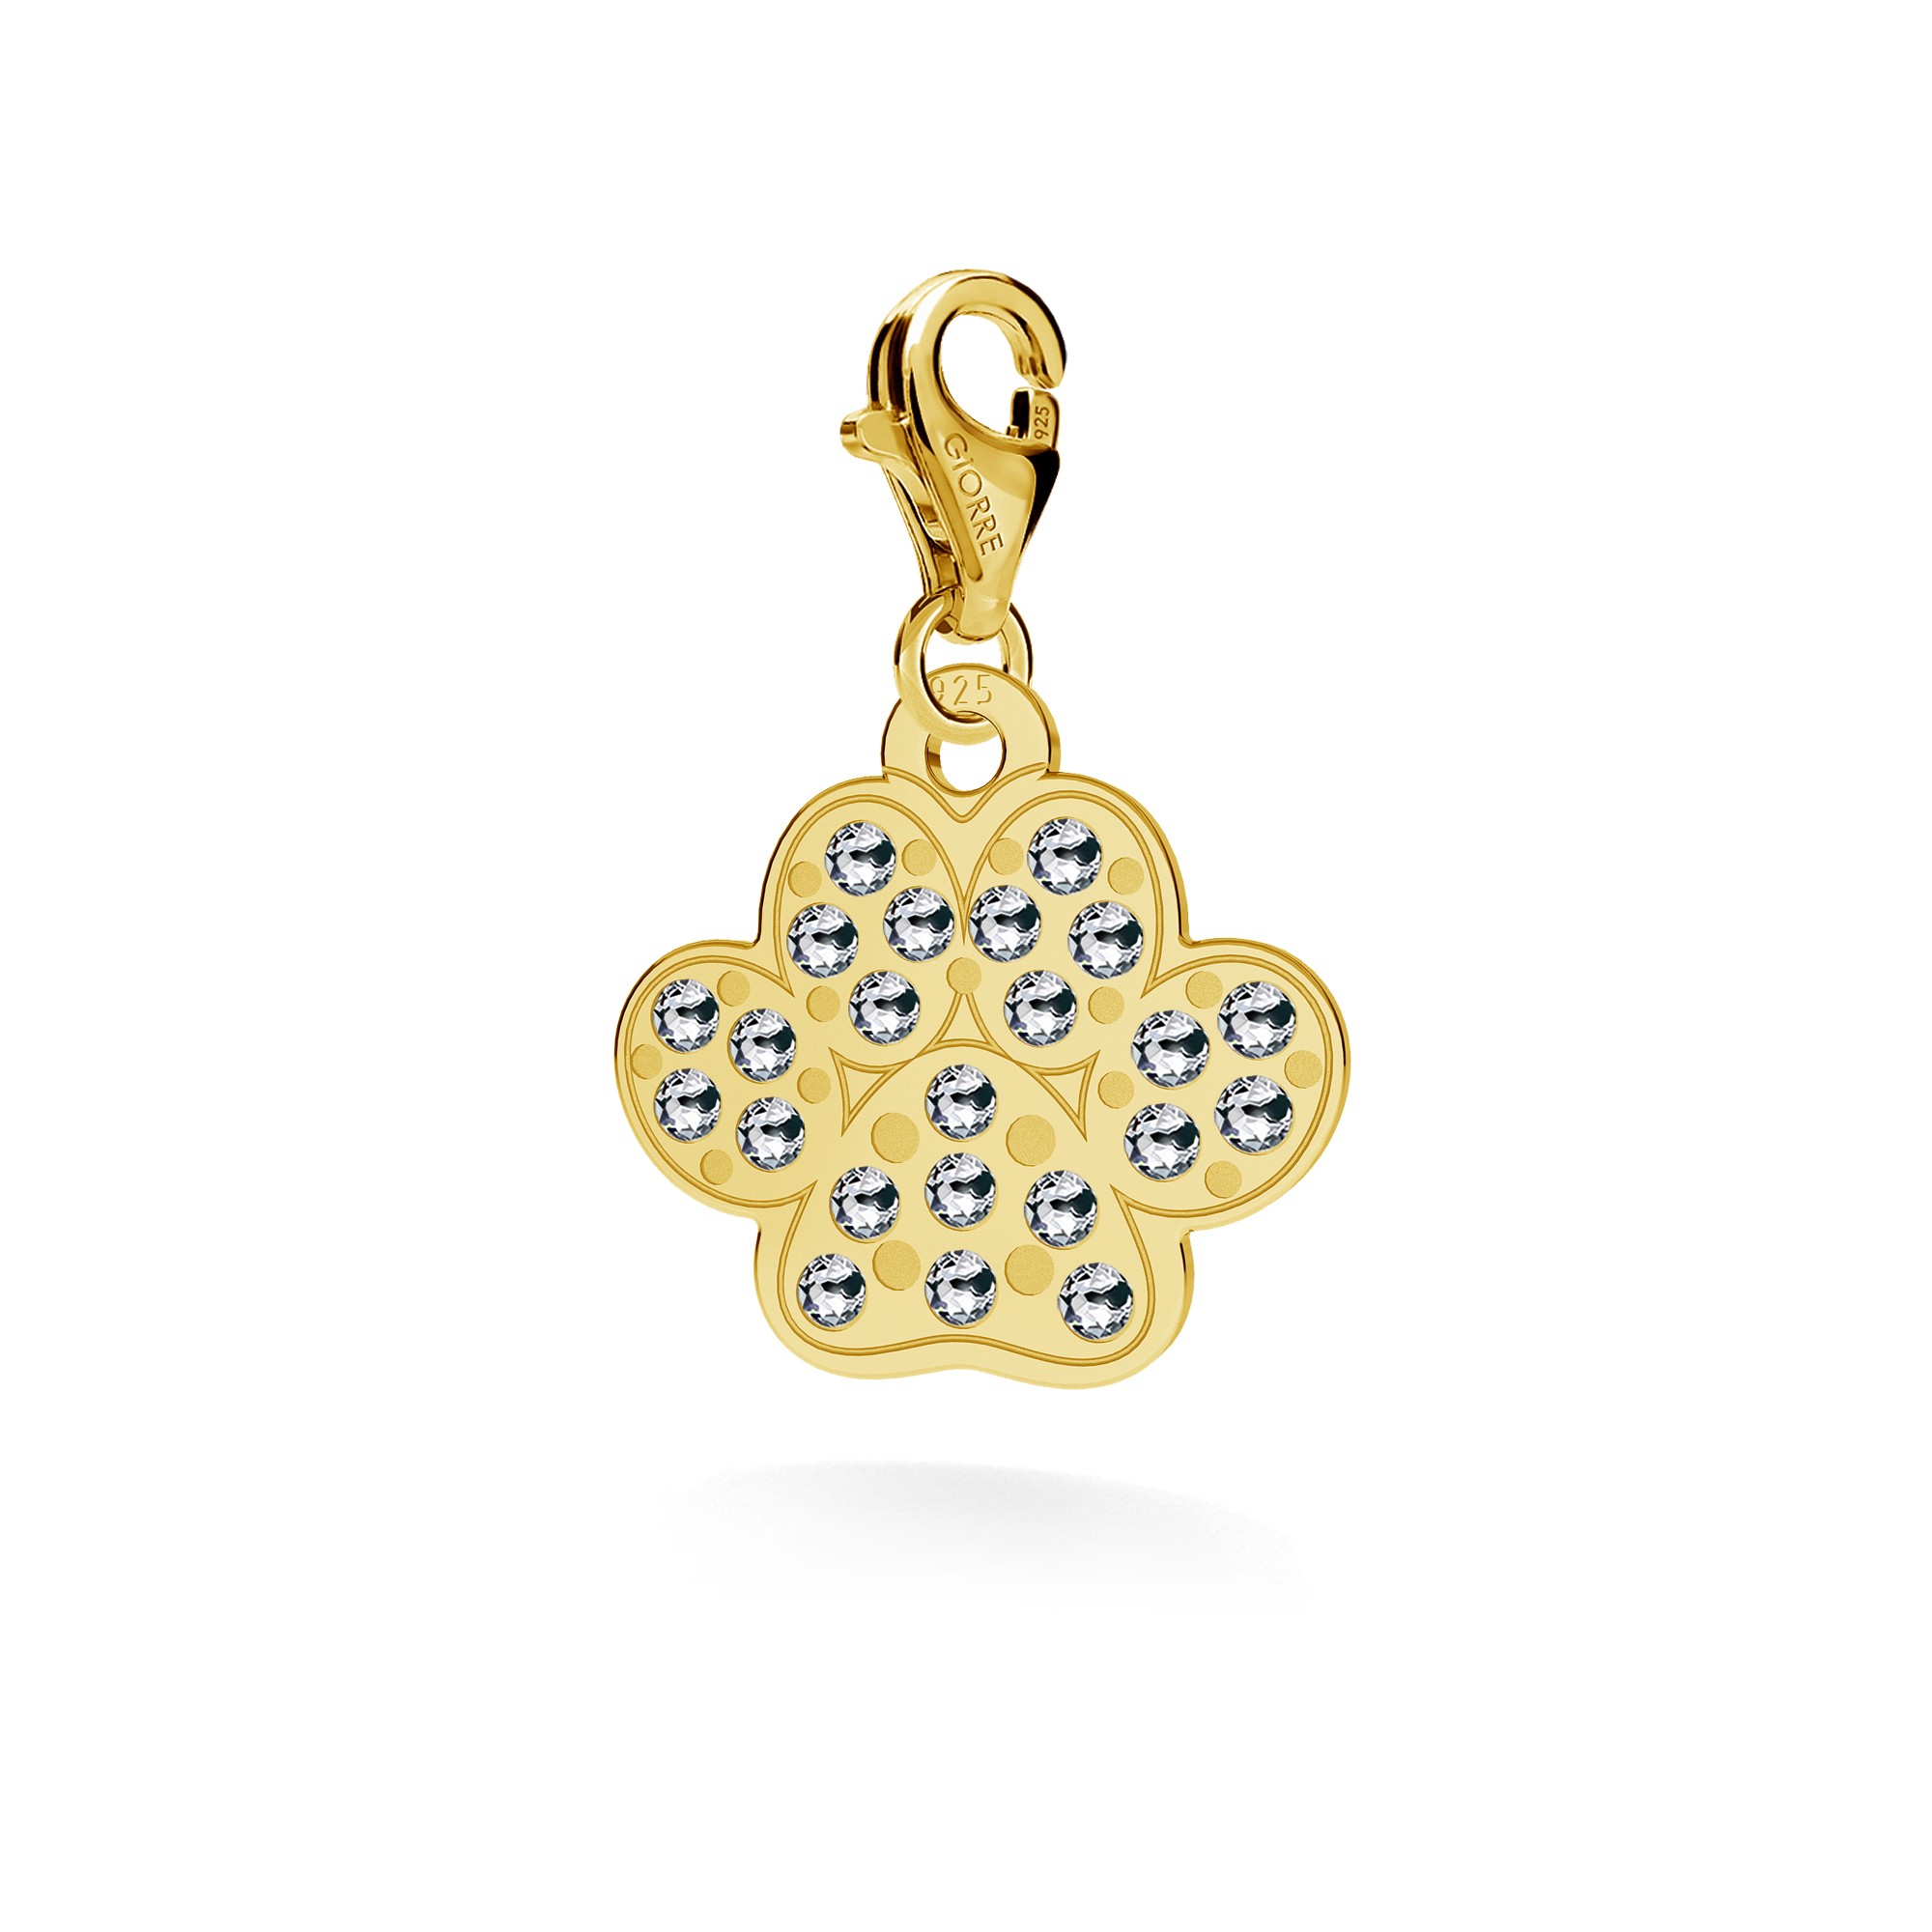 DOG PAW necklace with Swarovski crystals silver 925